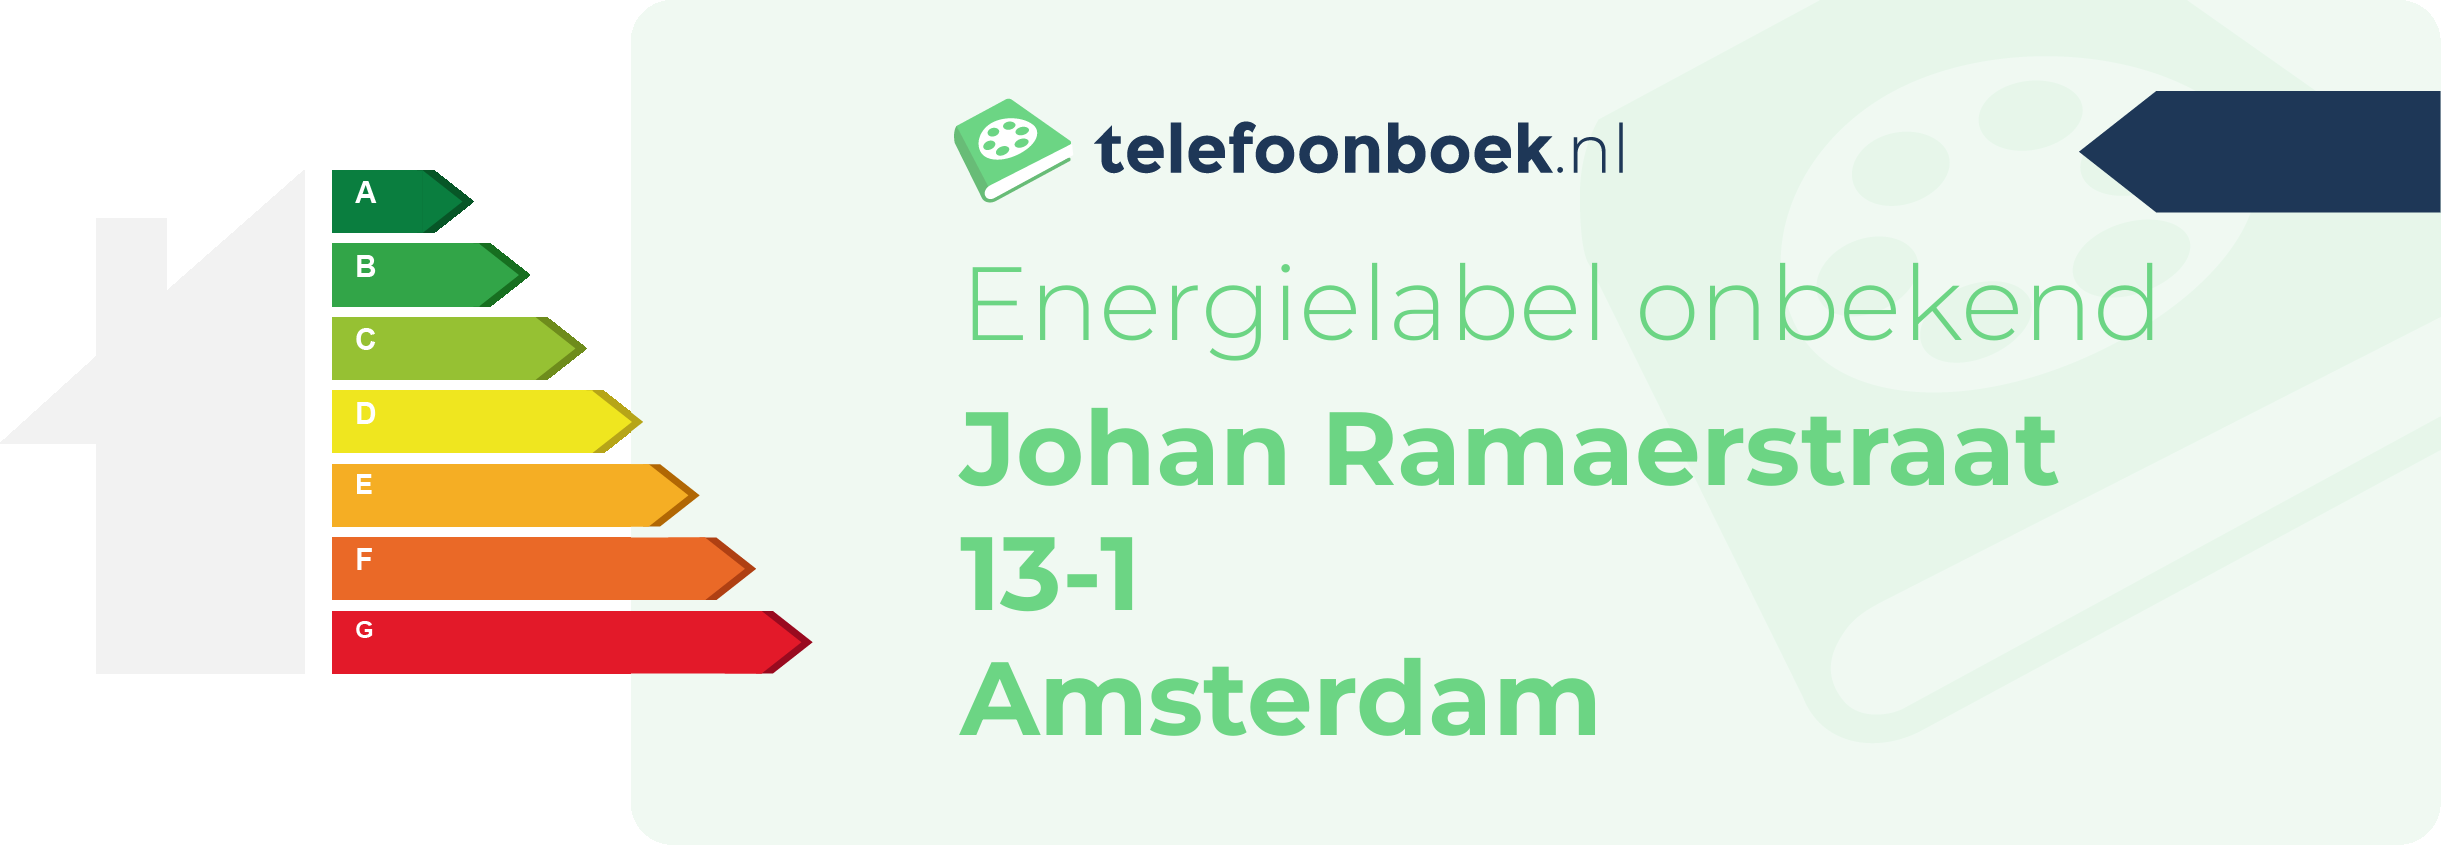 Energielabel Johan Ramaerstraat 13-1 Amsterdam